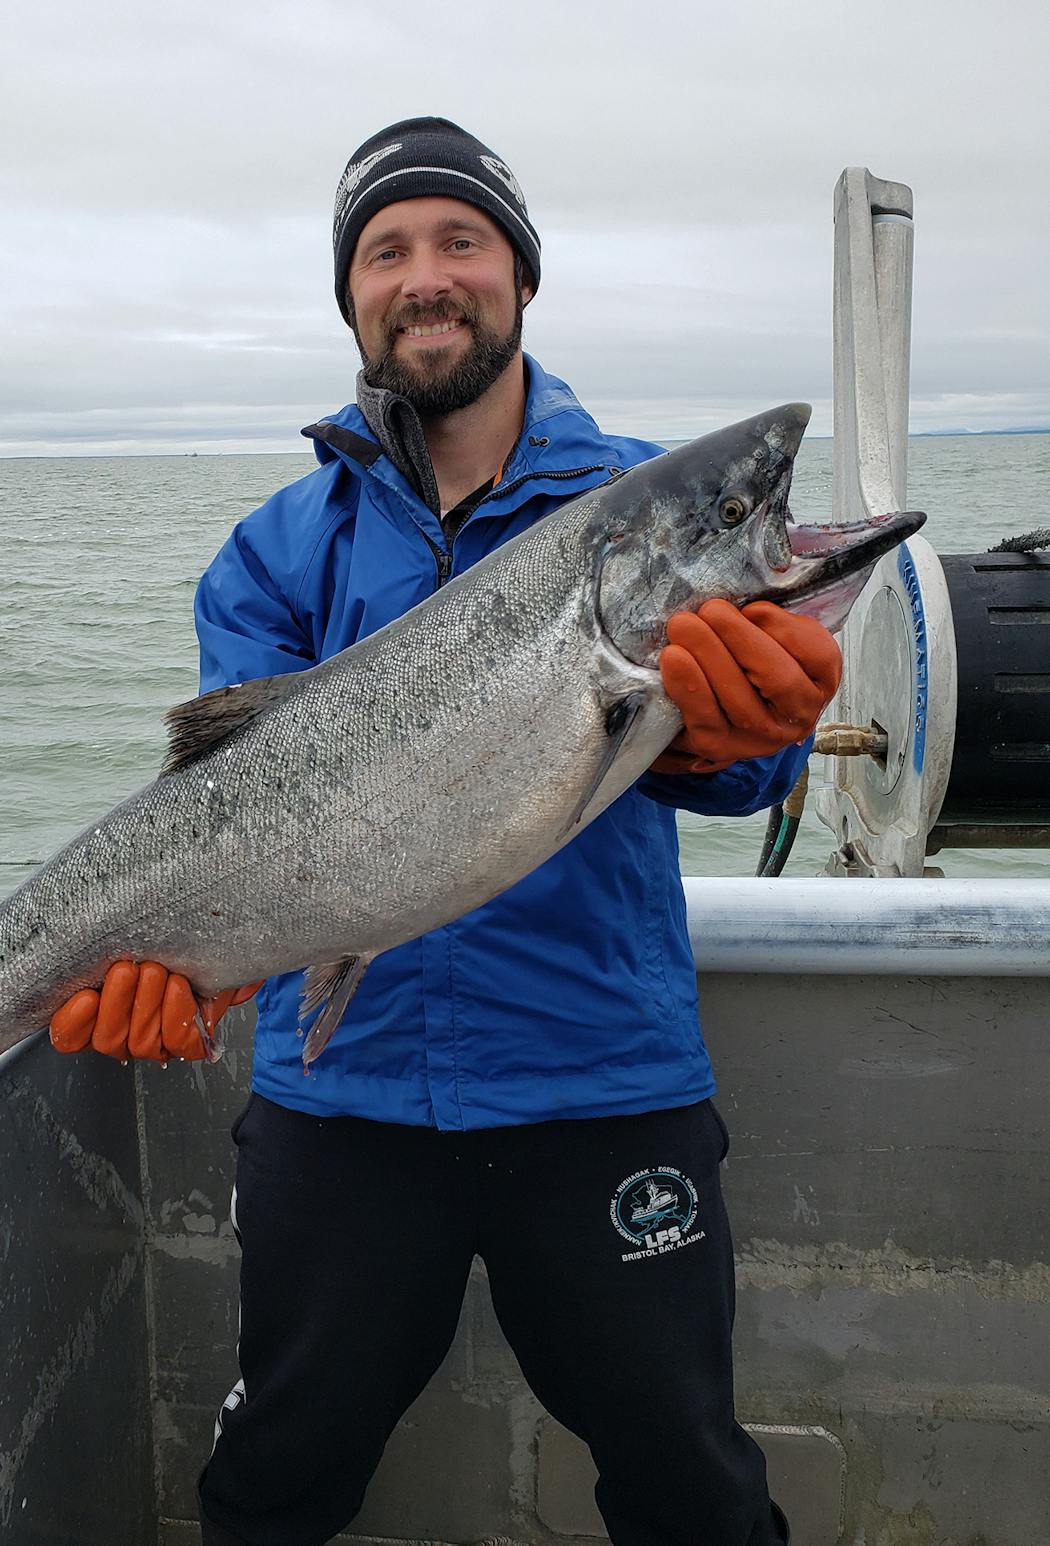 Tom Rogotzke with a King salmon.